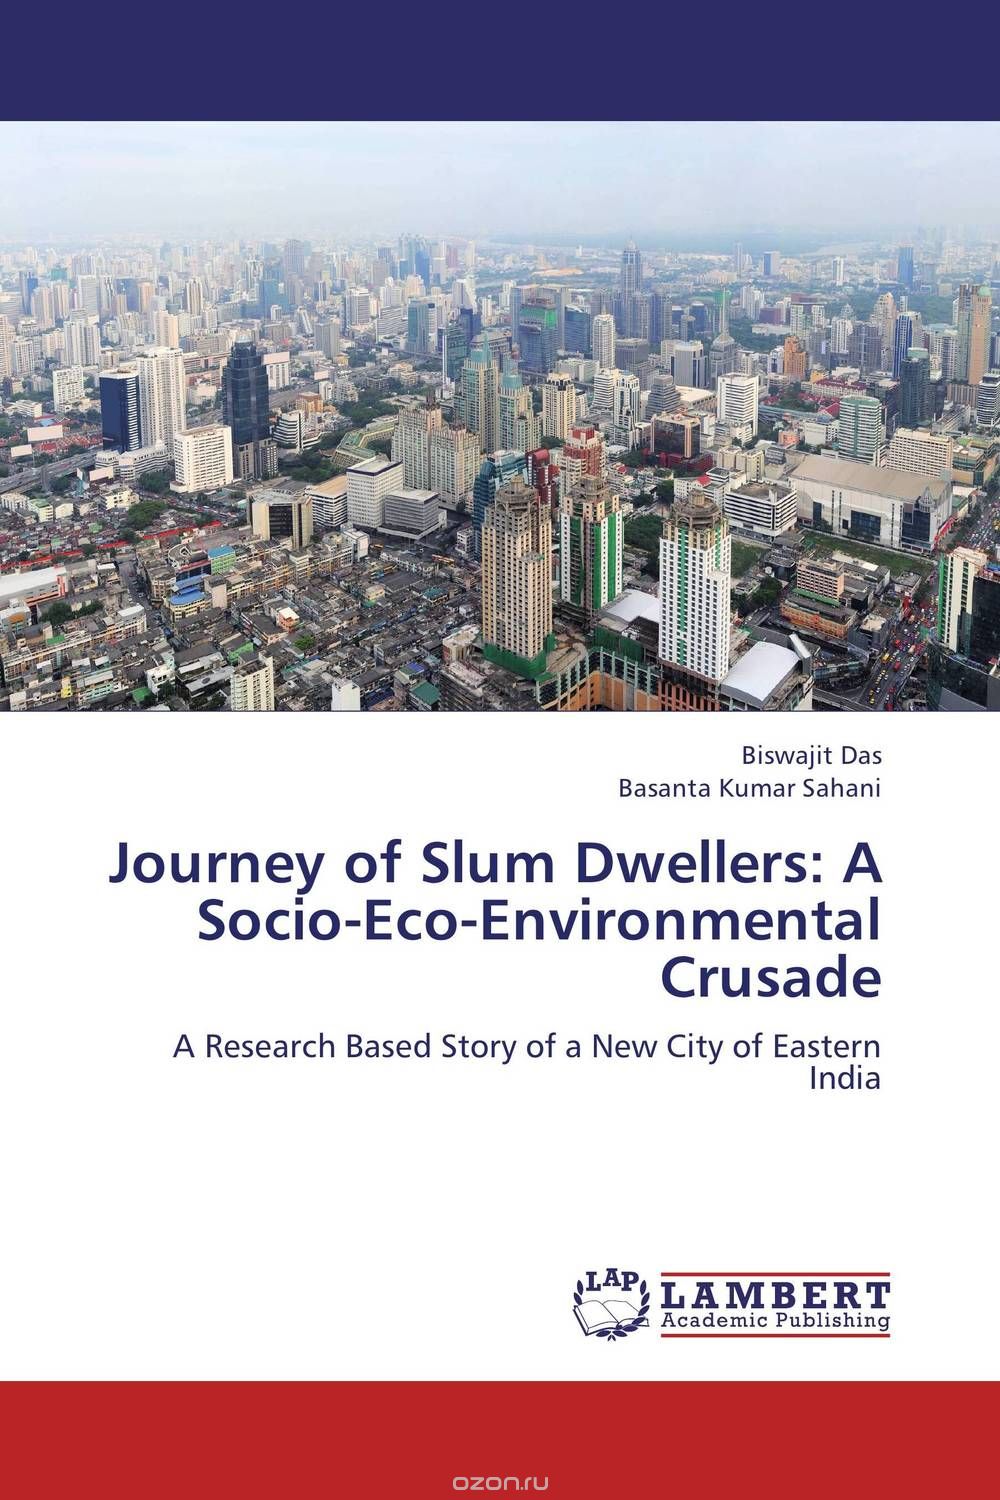 Скачать книгу "Journey of Slum Dwellers: A Socio-Eco-Environmental Crusade"